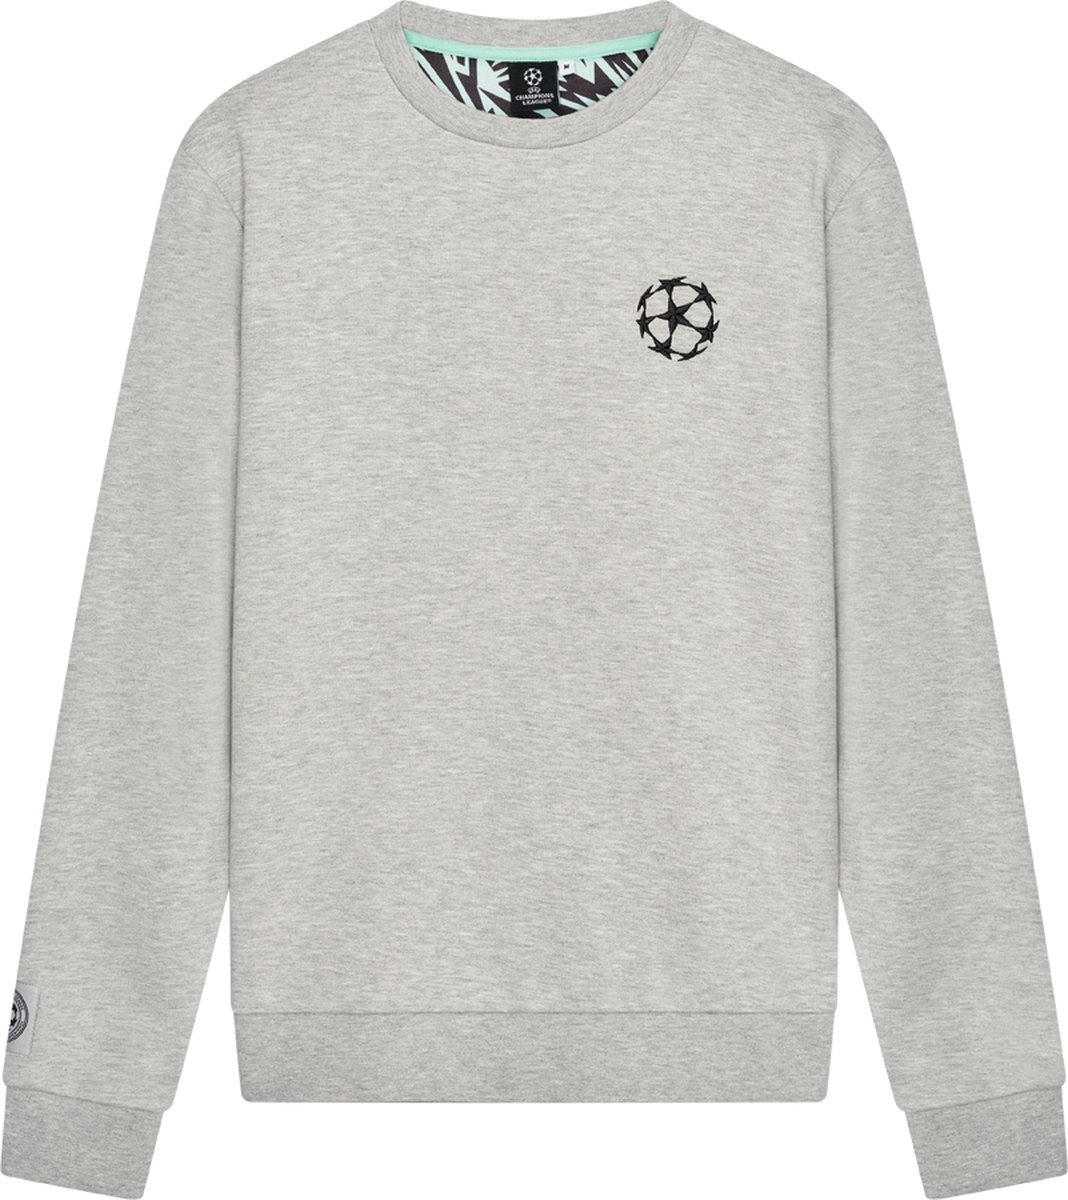 Champions League lifestyle sweater - maat XXL